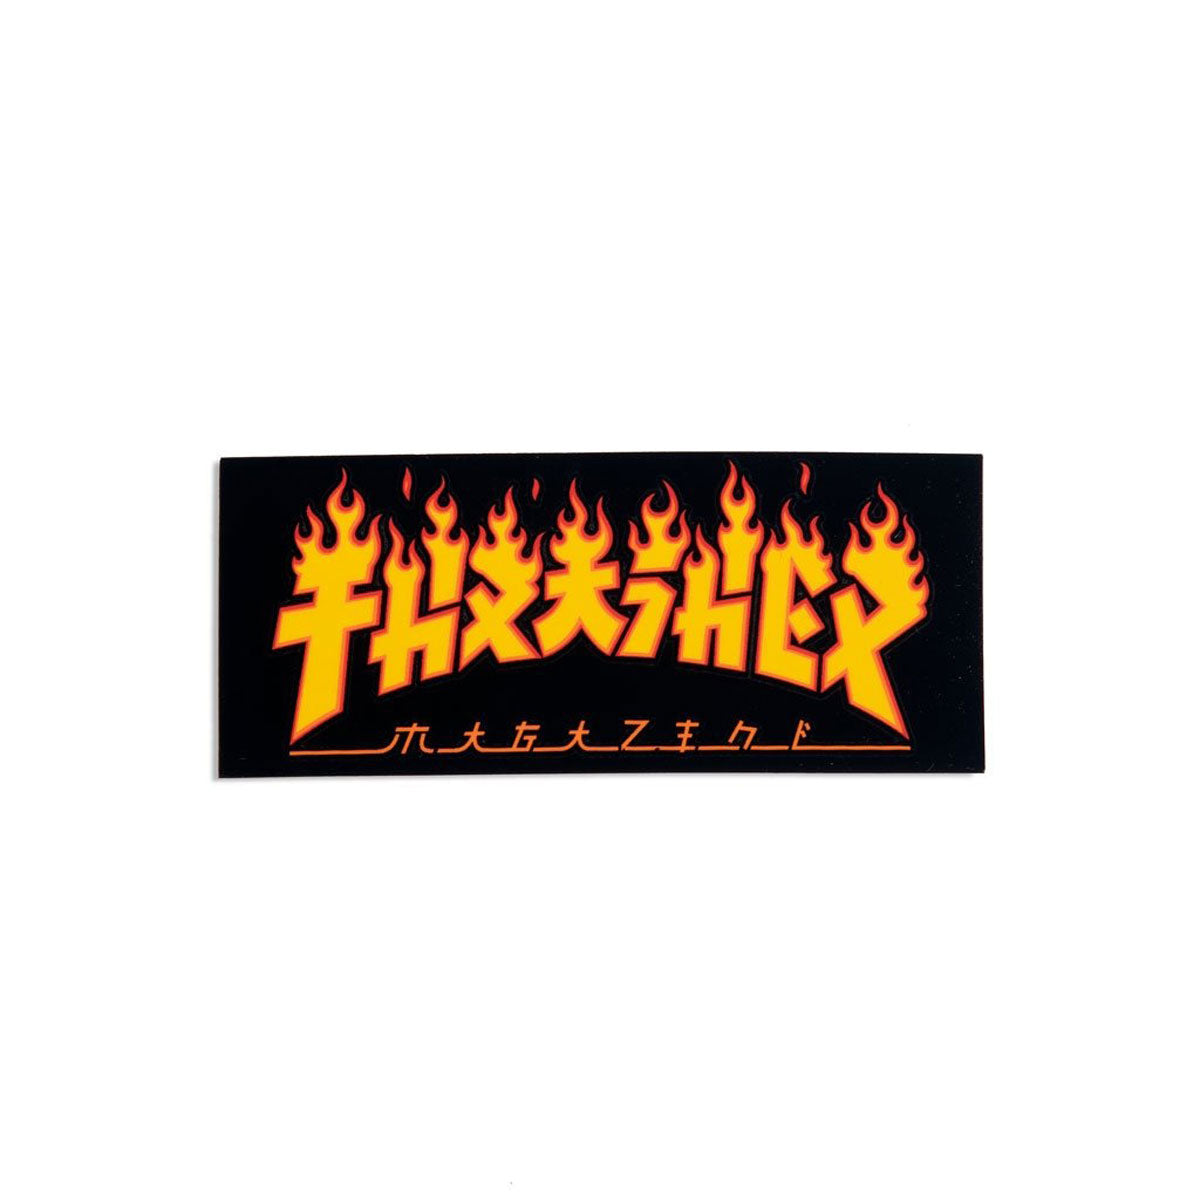 Thrasher Godzilla Flame Sticker image 1